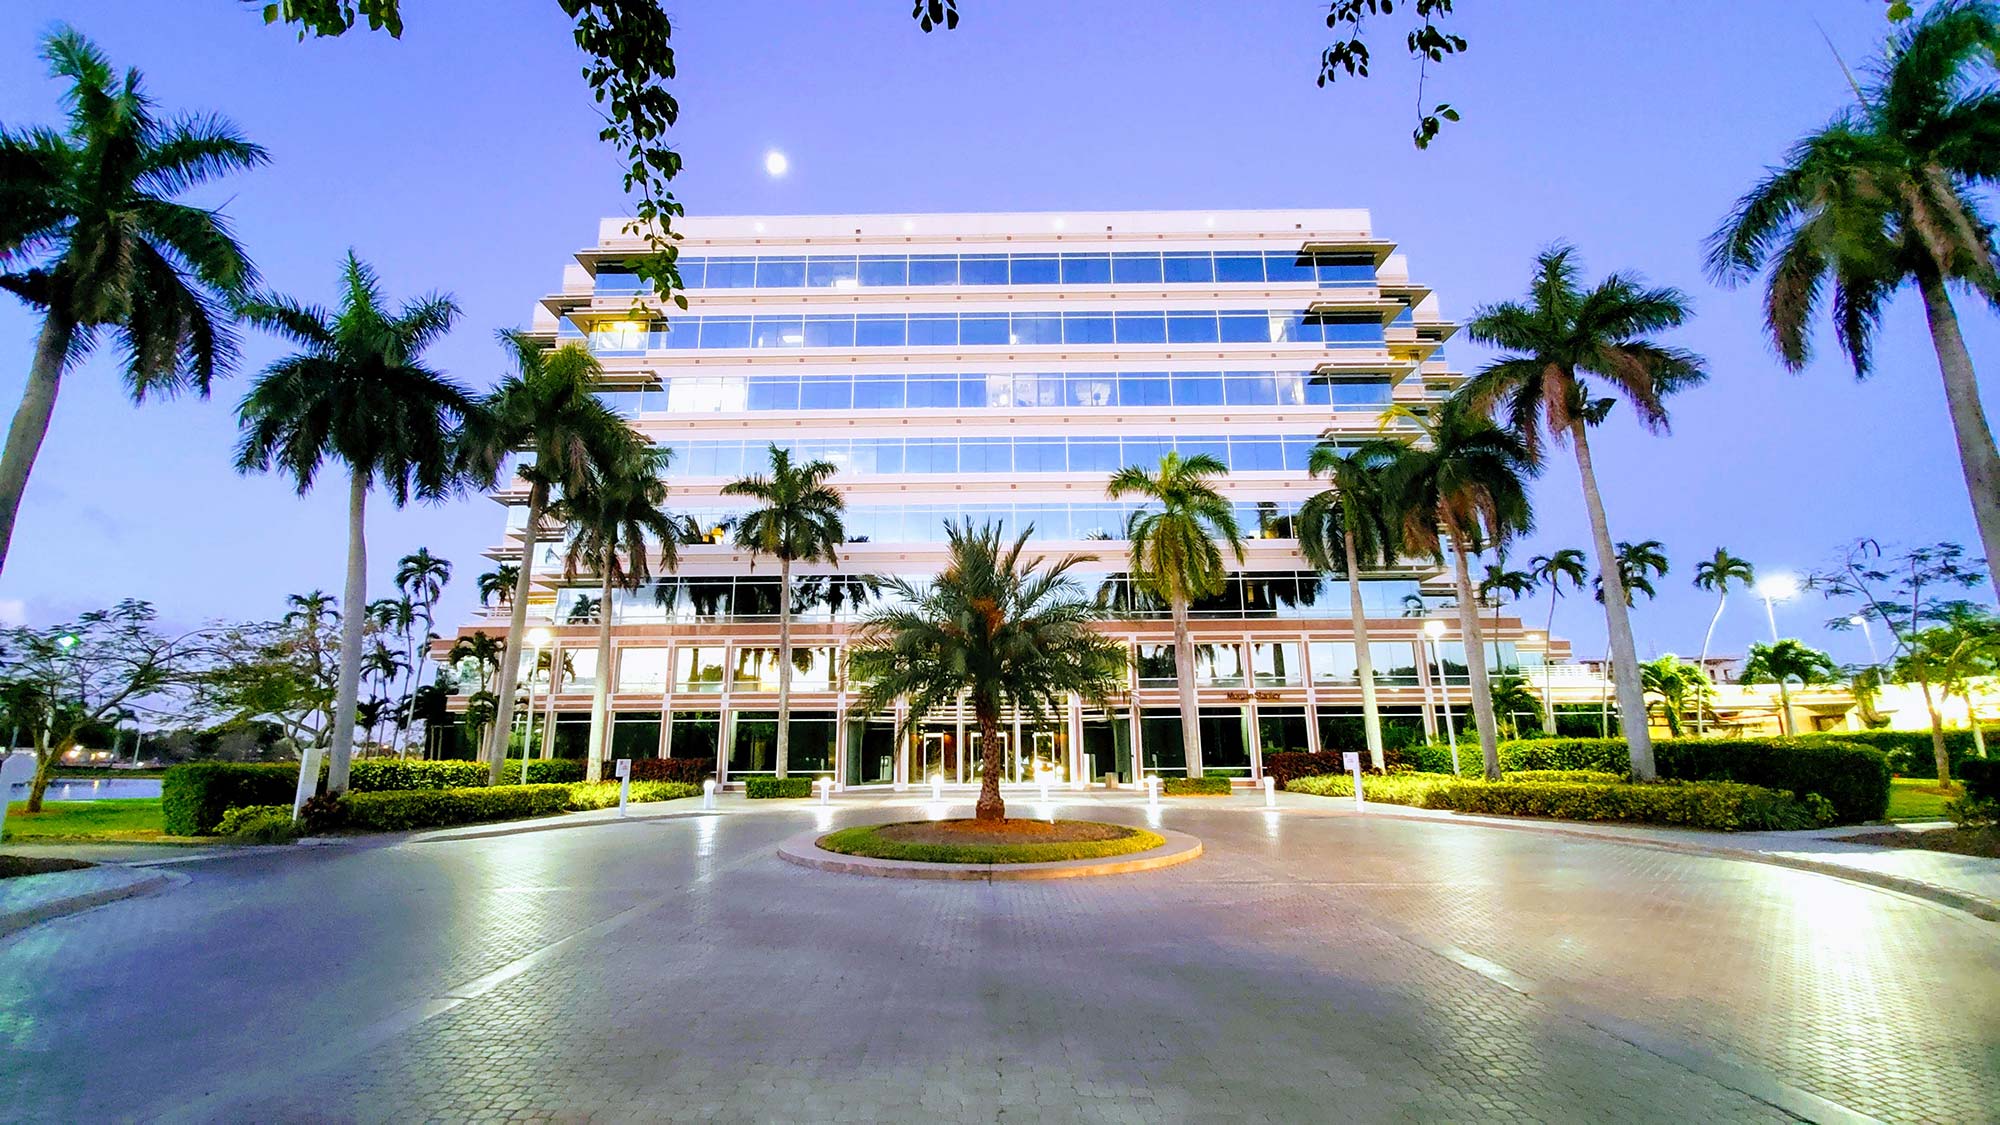 House of Juice ultra luxury Miami